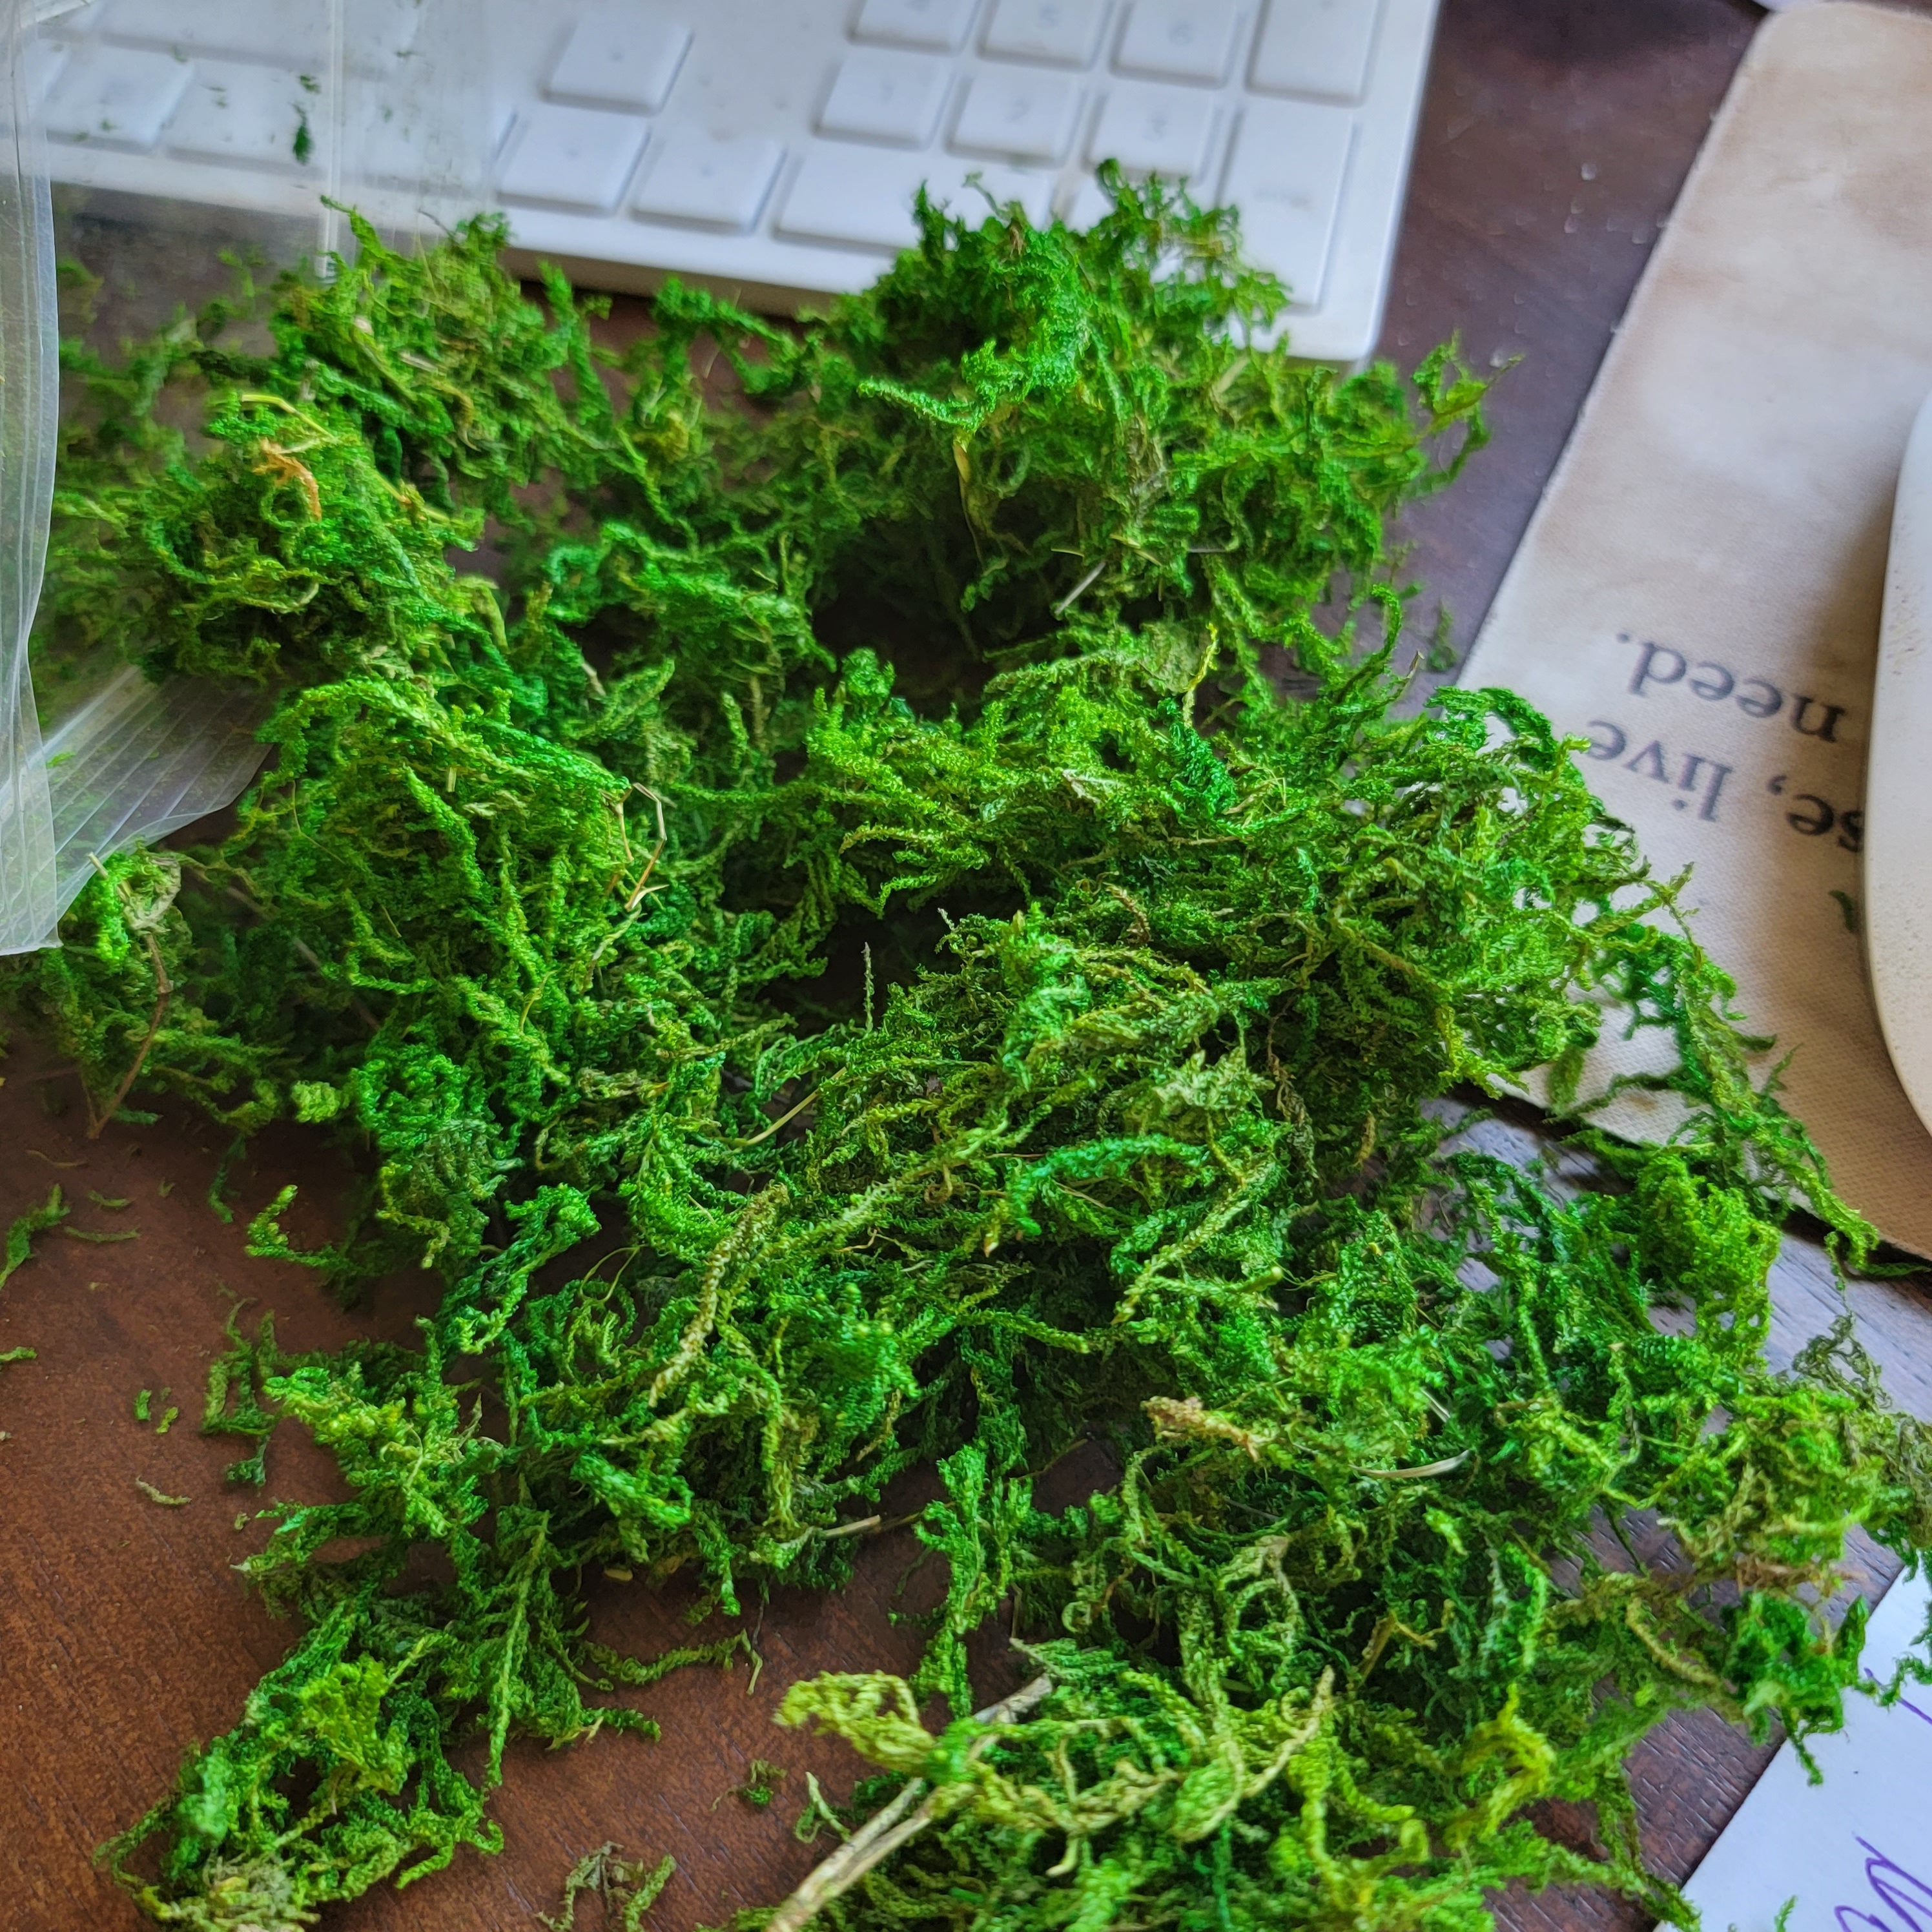 Preserved Preserved Sphagnum Moss - Bulk Box 1,5 kg - Green